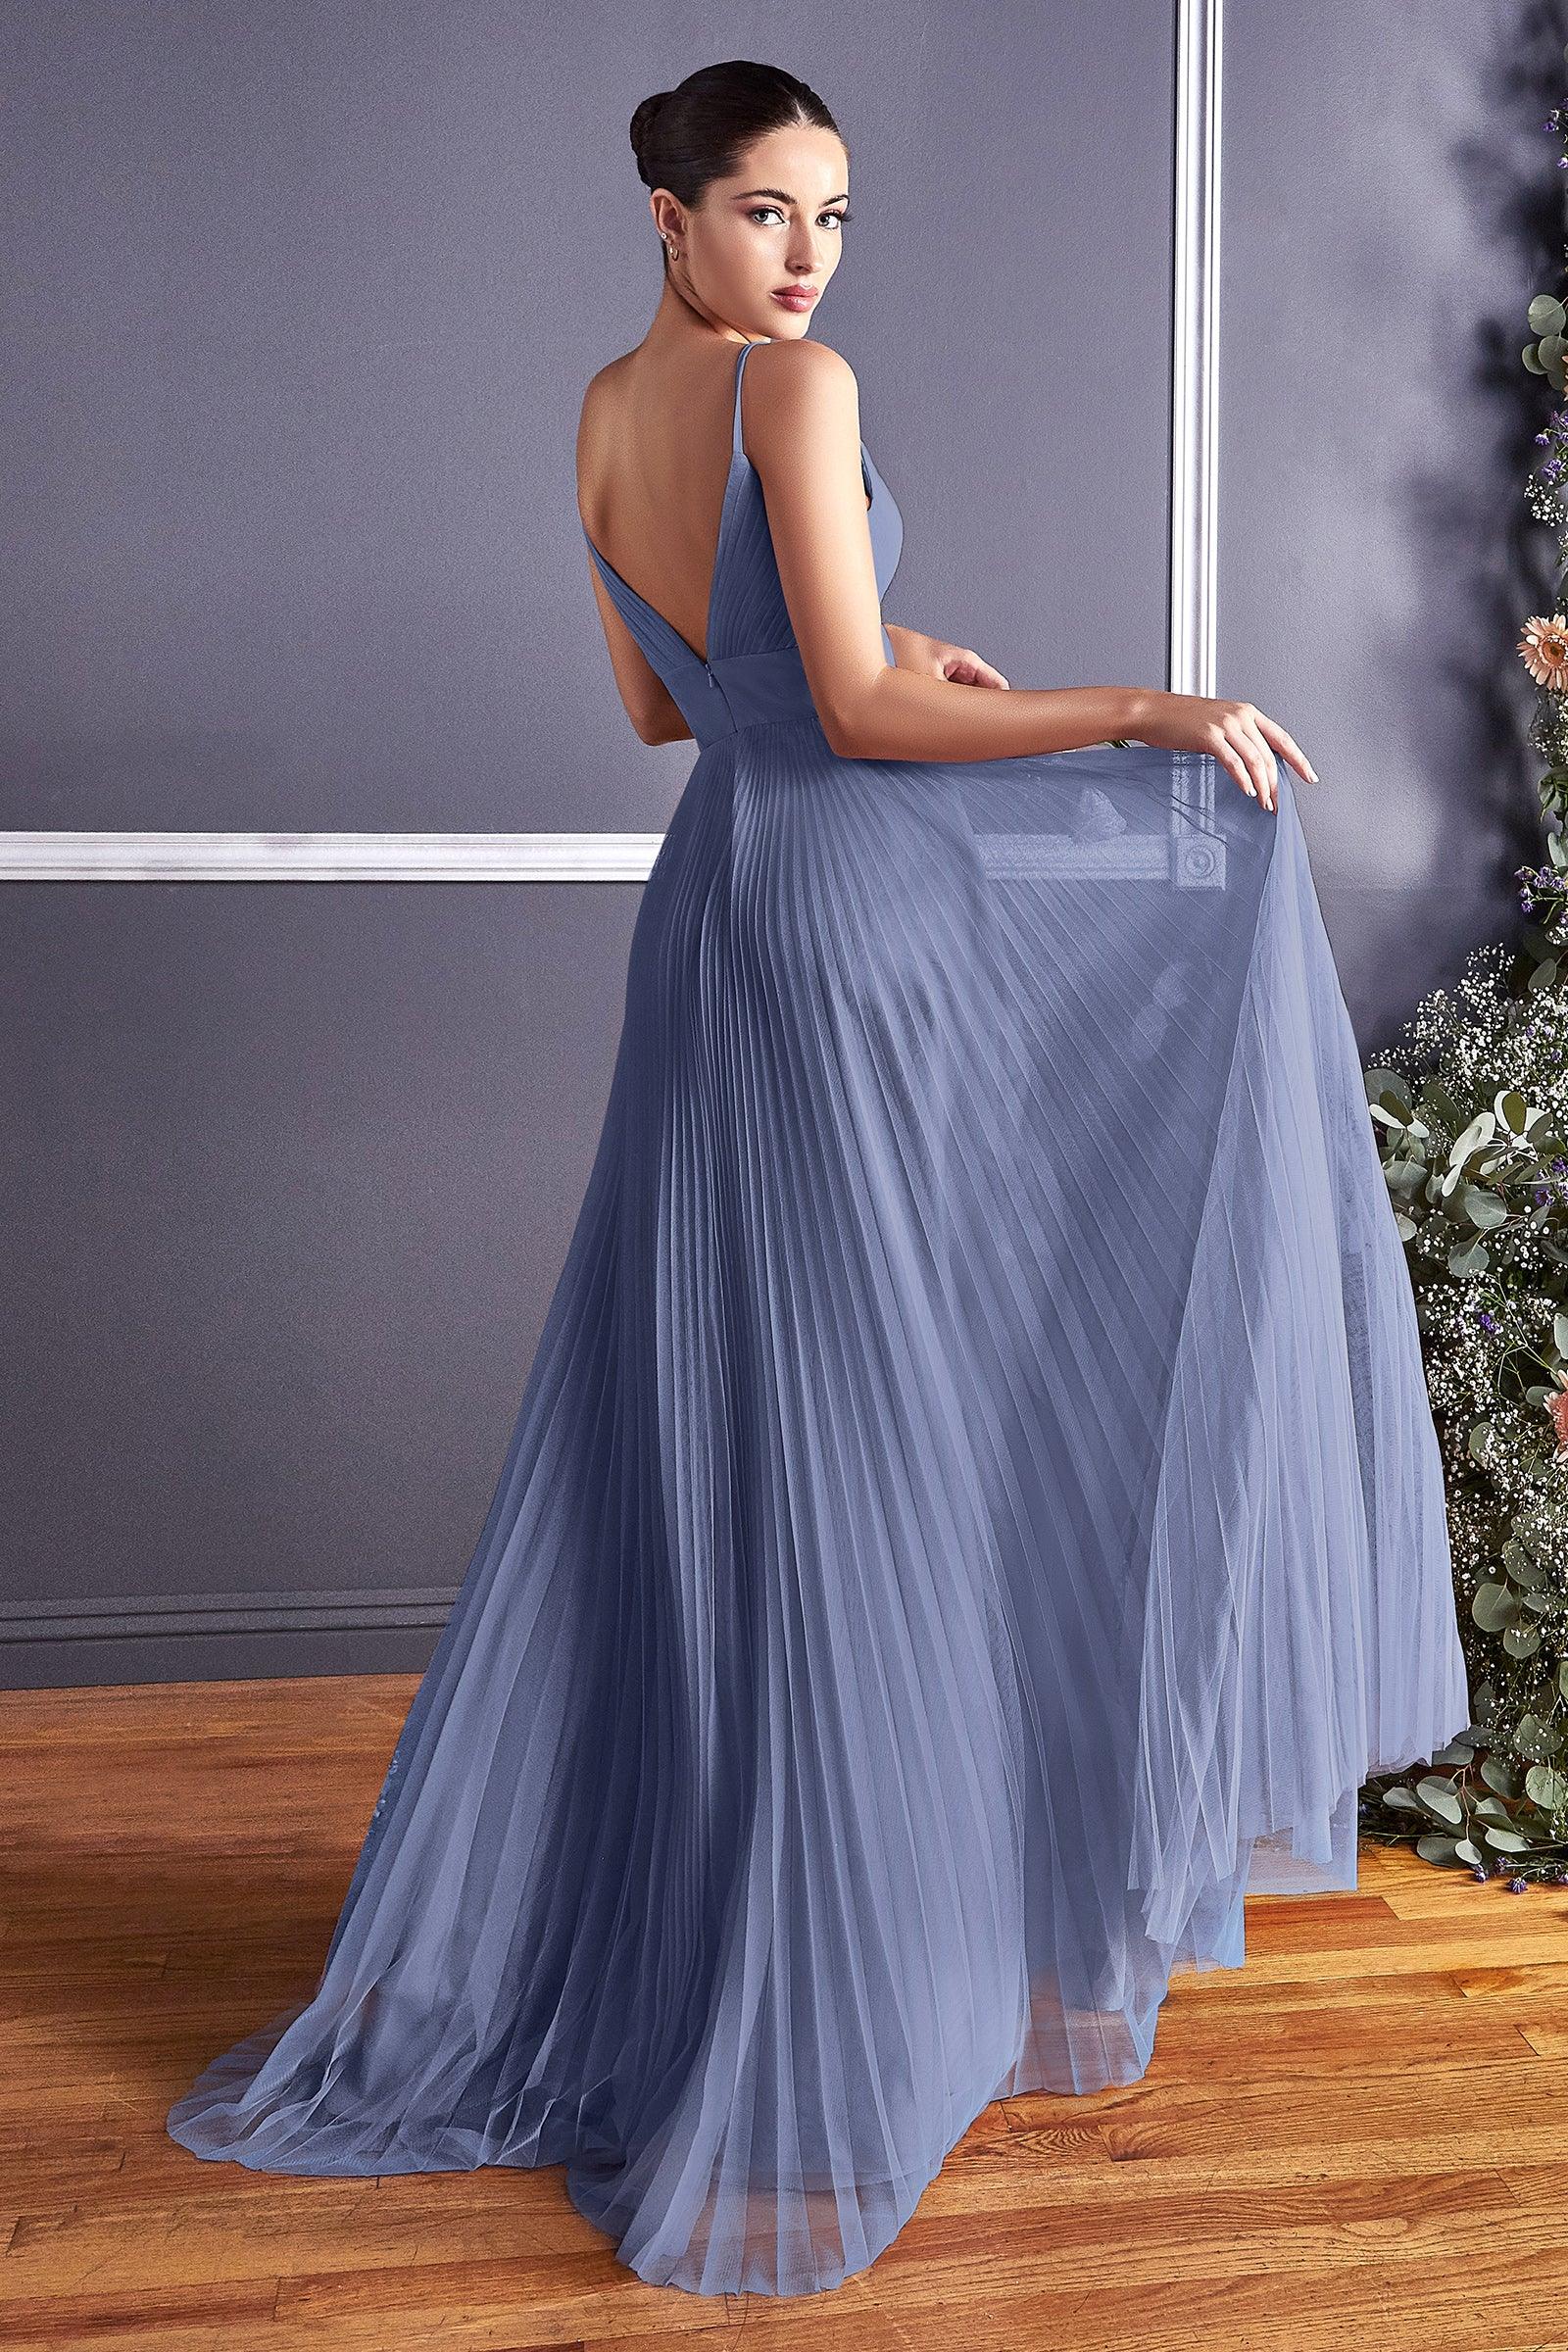 A-Line Long Formal Dress - The Dress Outlet